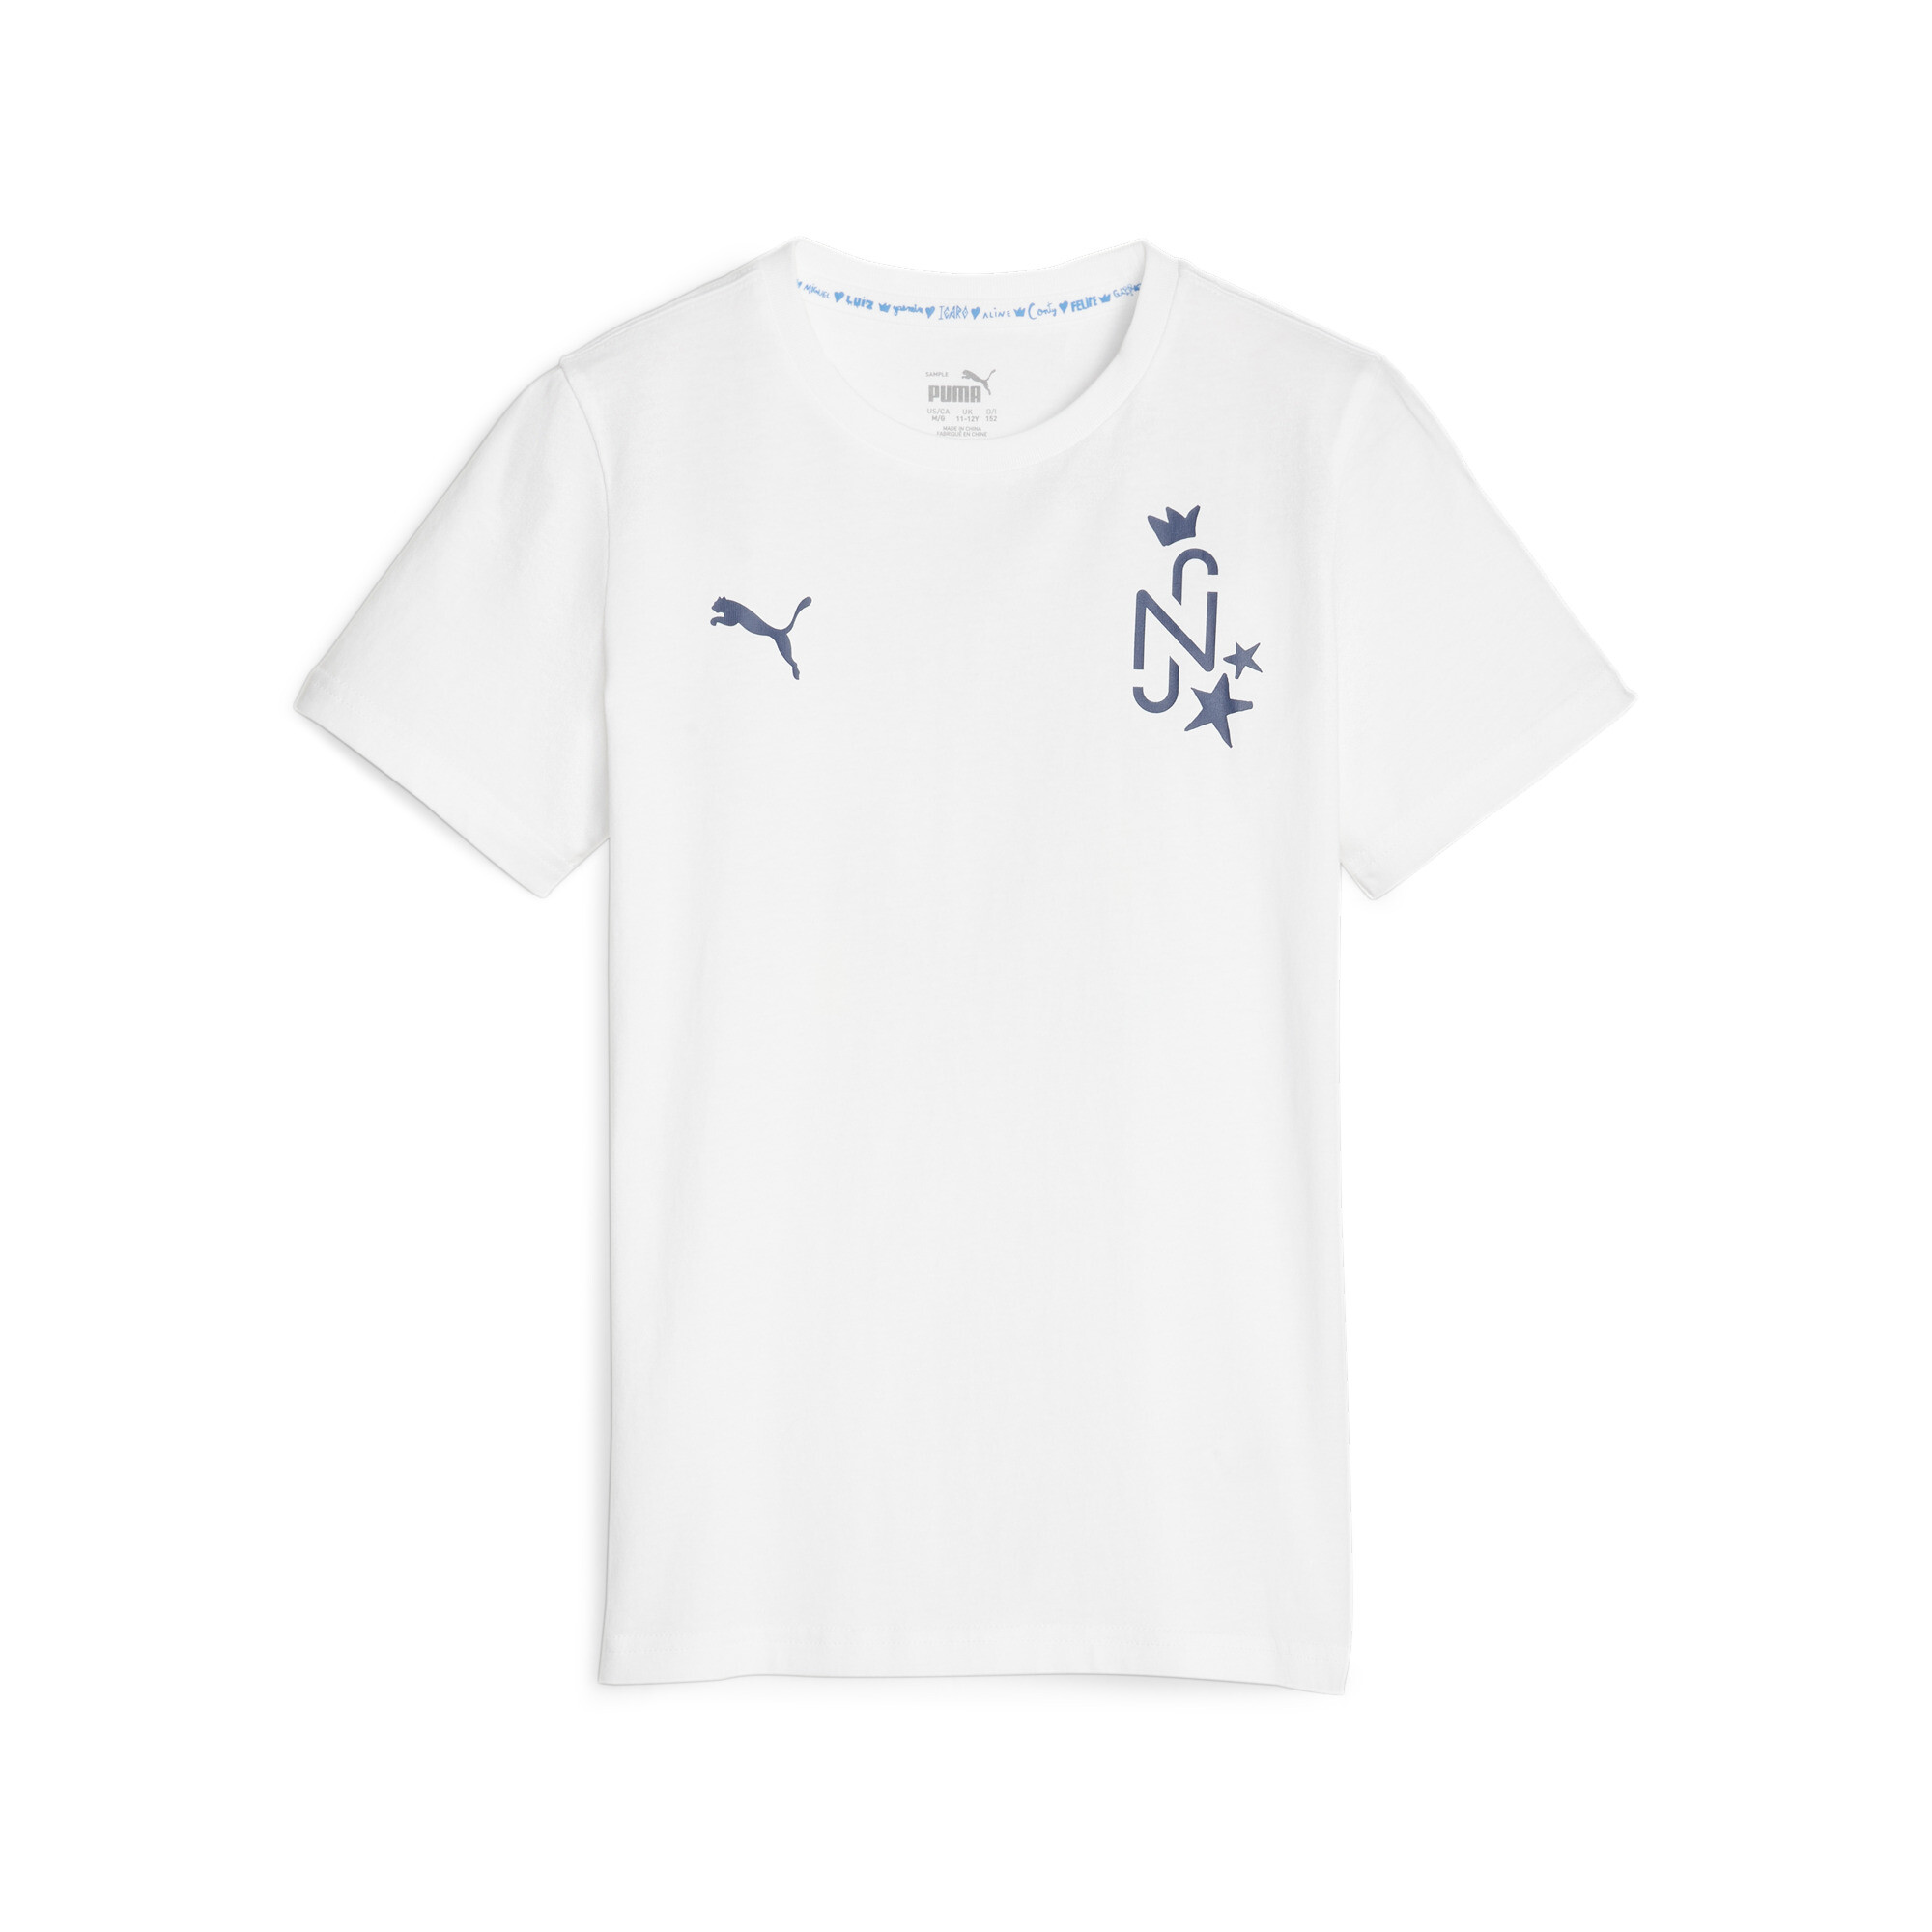 PUMA Neymar Jr Football T-Shirt In White, Size 11-12 Youth